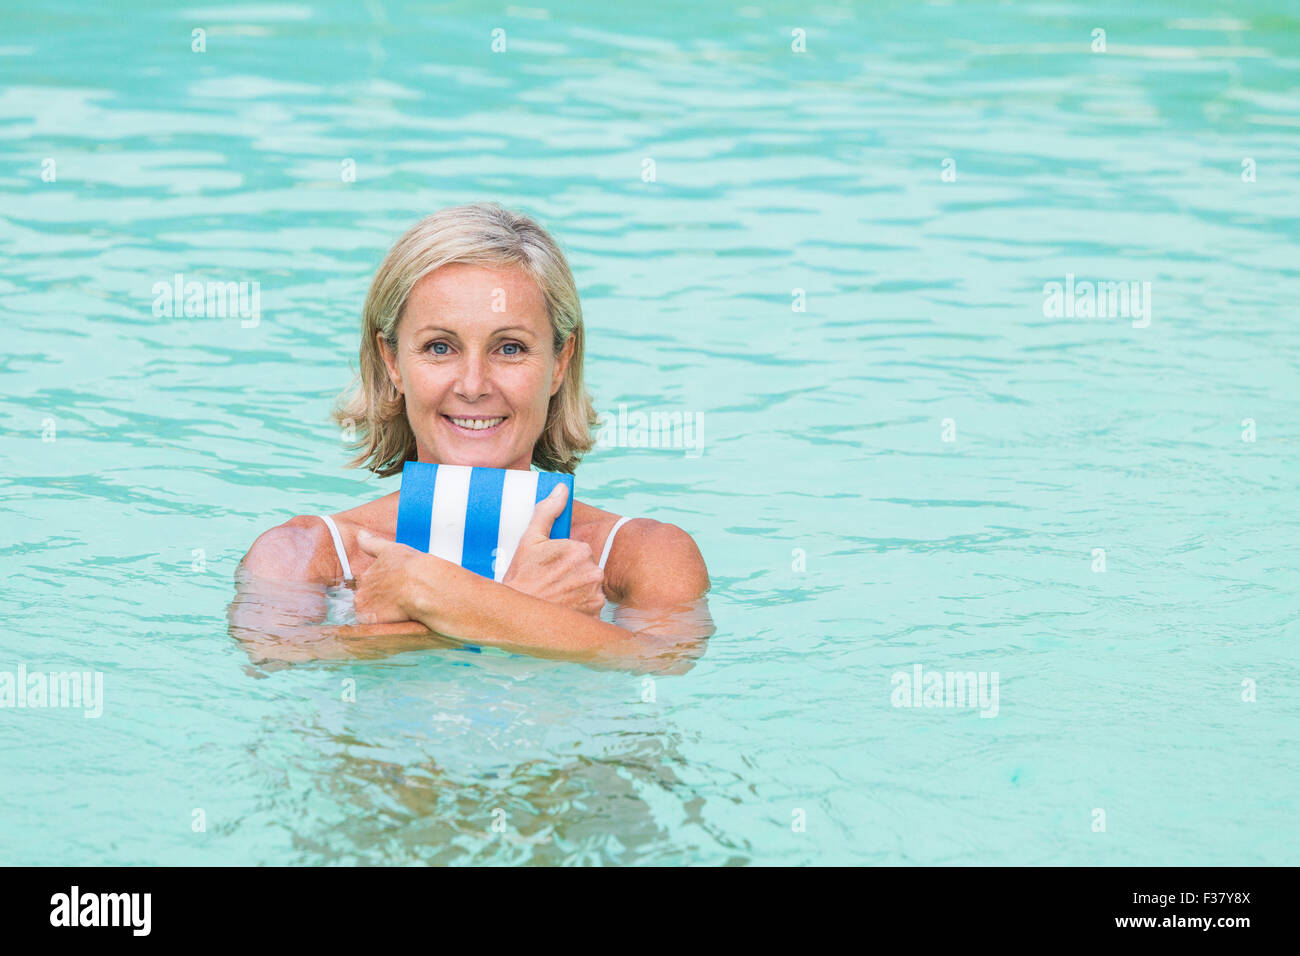 Woman in a swimming pool. Stock Photo